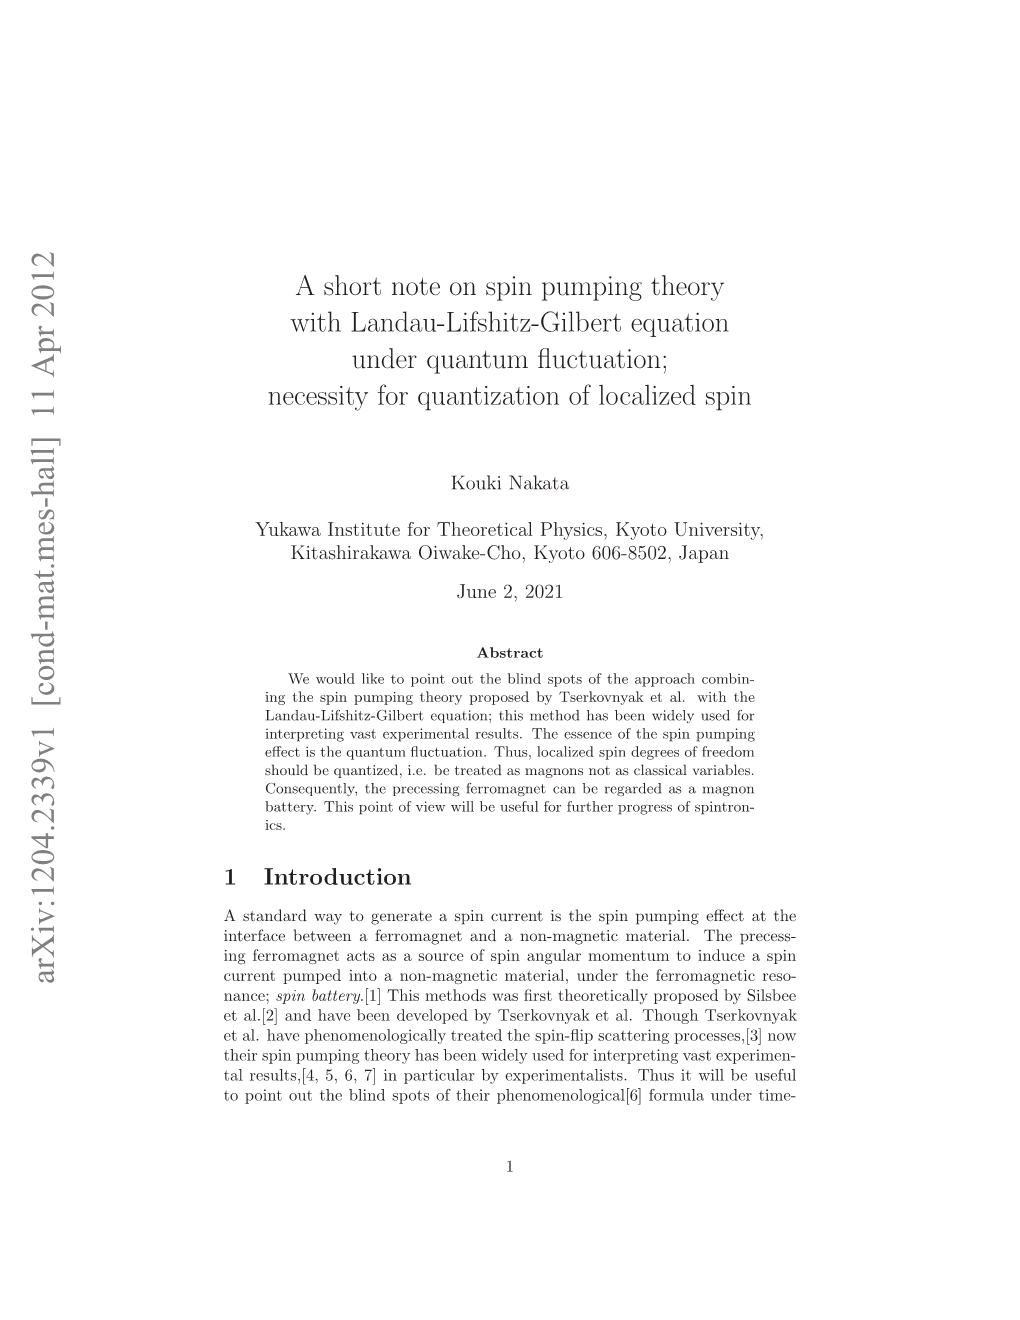 A Short Note on Spin Pumping Theory with Landau-Lifshitz-Gilbert